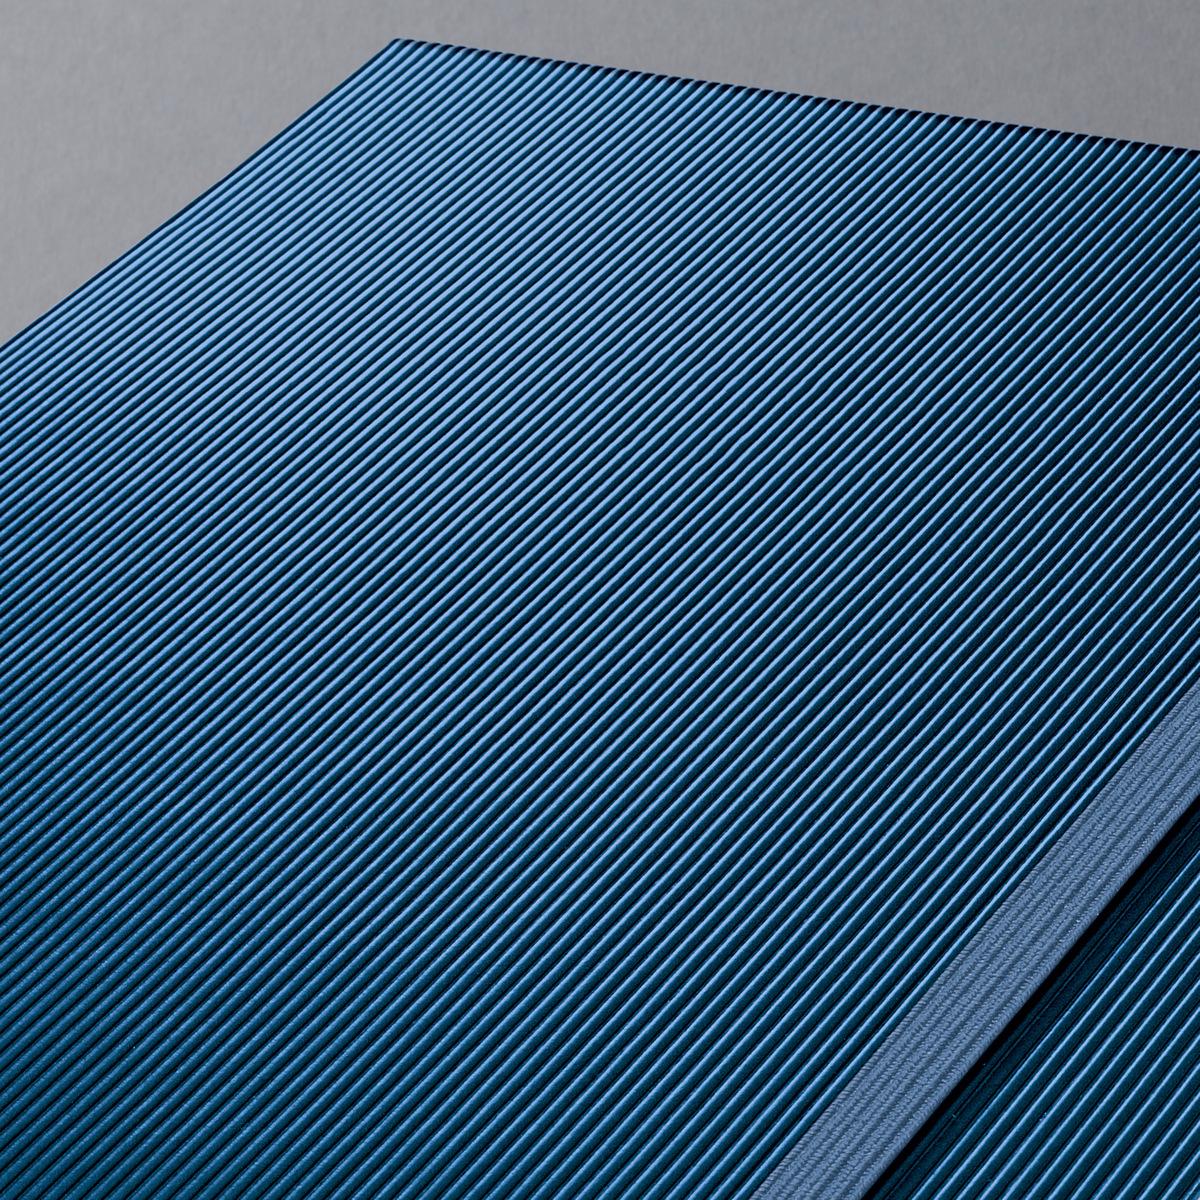 Notizbuch-Conceptum-hardcover-Detail-bluemetallic-01-A